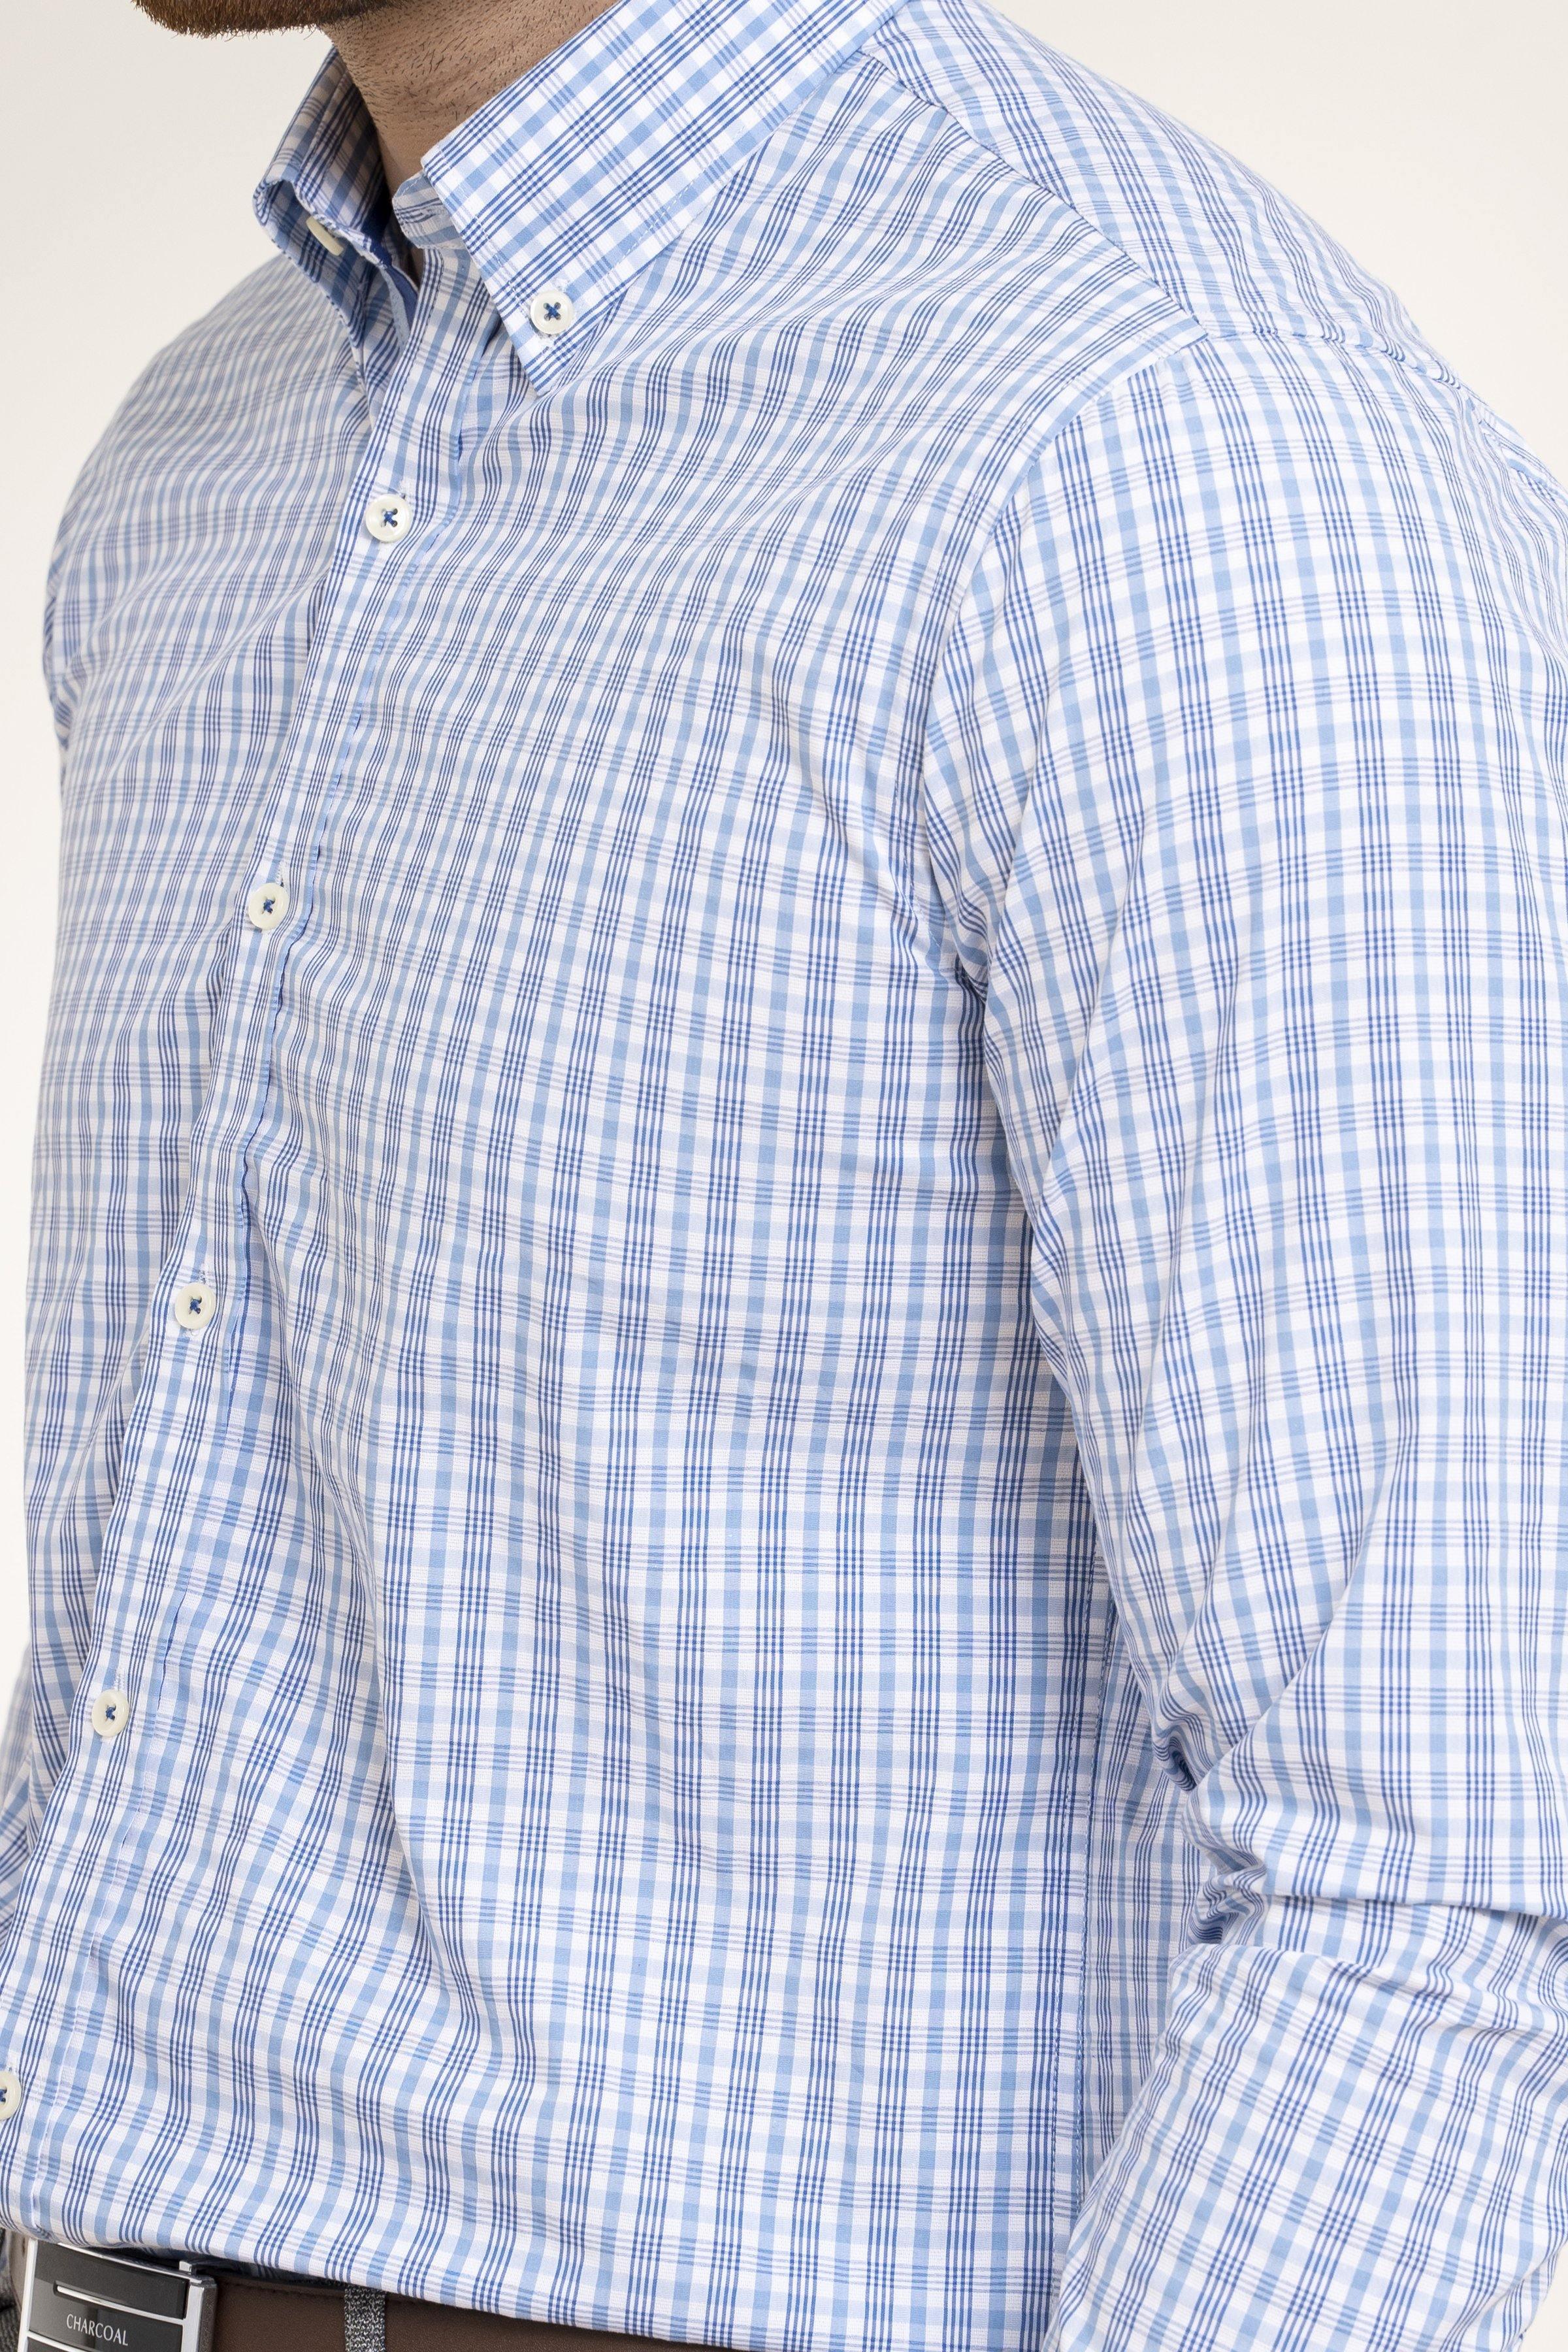 SEMI FORMAL SHIRT BLUE WHITE CHECK at Charcoal Clothing